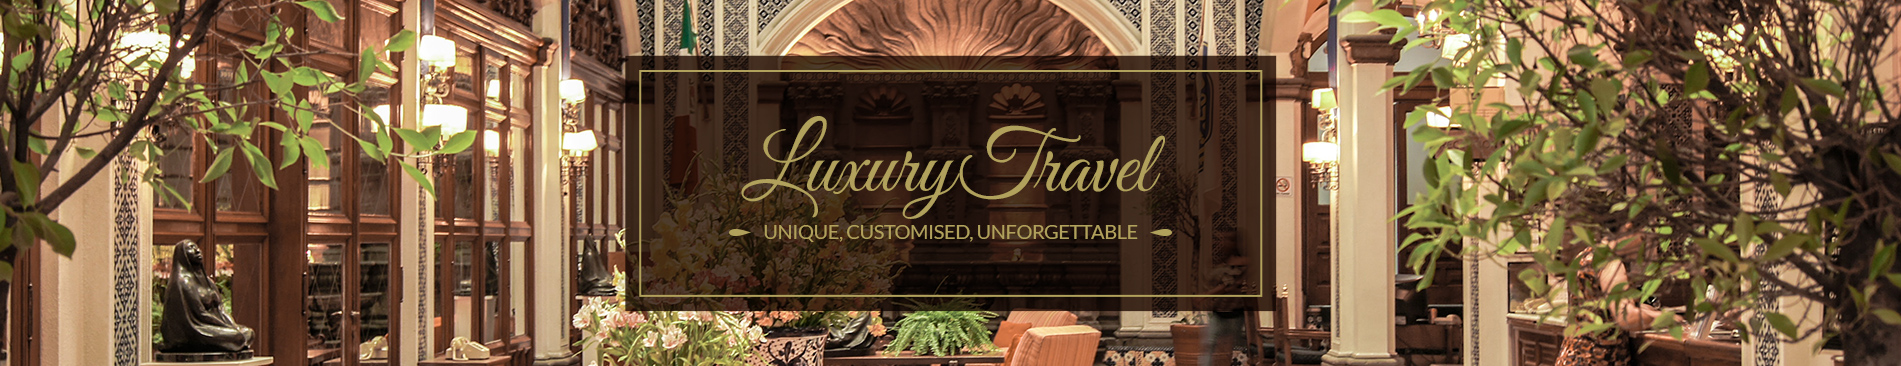 Luxury Travel - Unique, Customised, Unforgettable